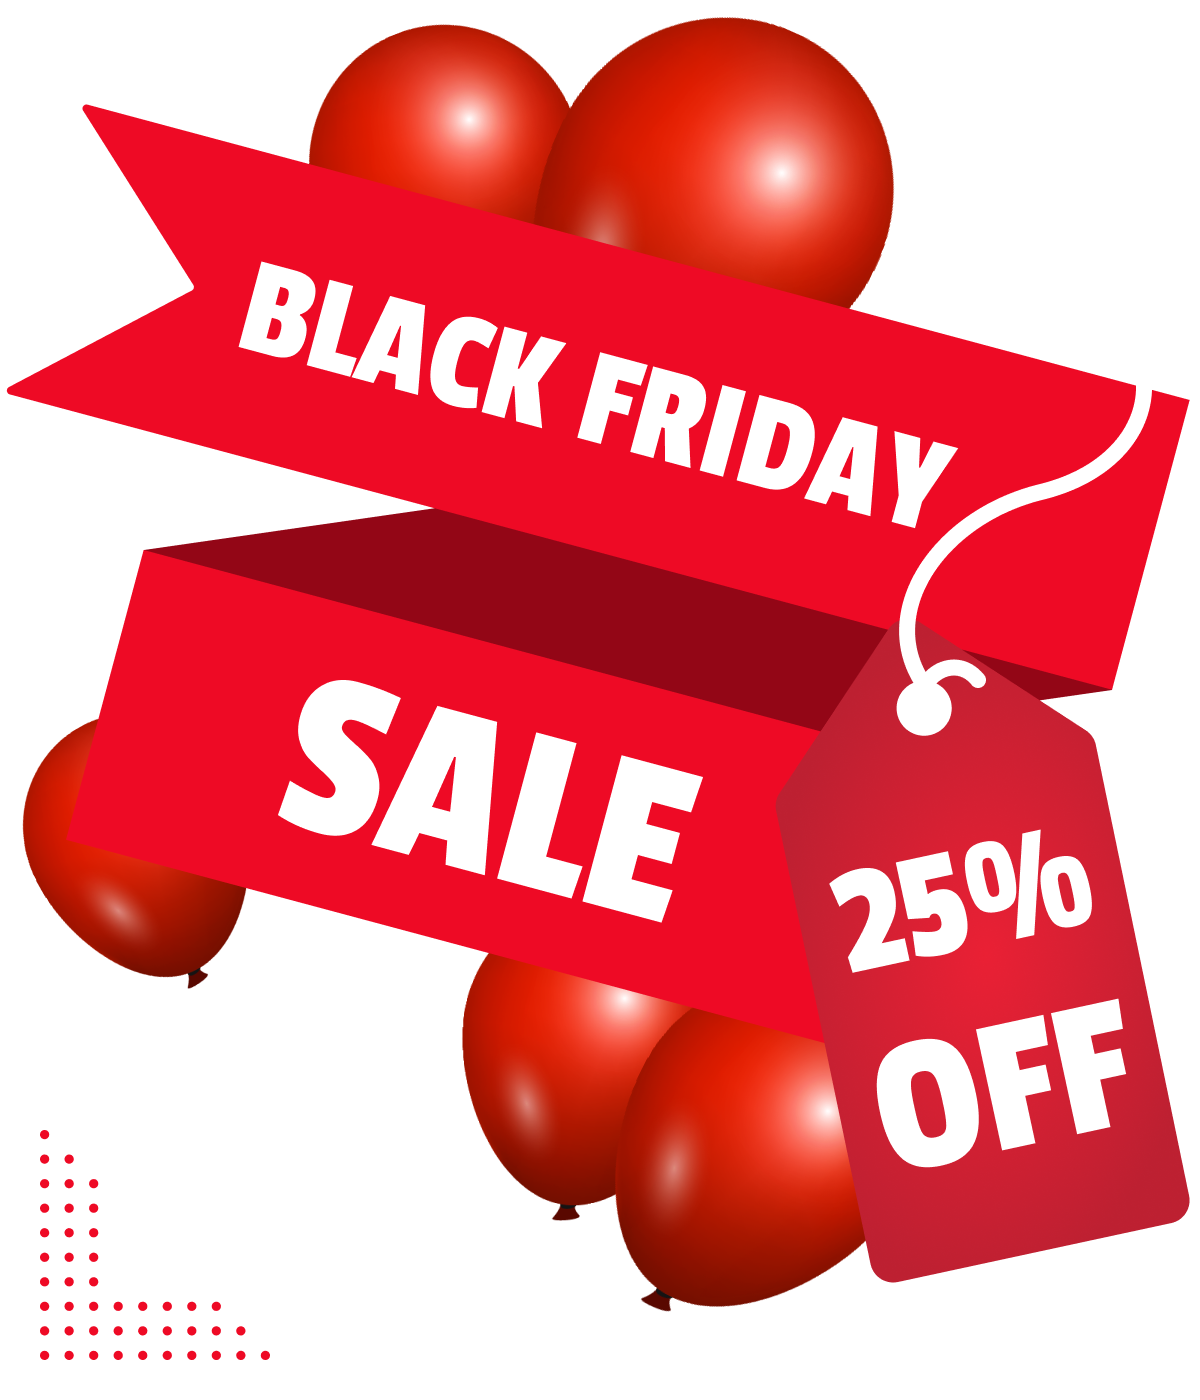 Black Friday Sale - 25% Off! hero image